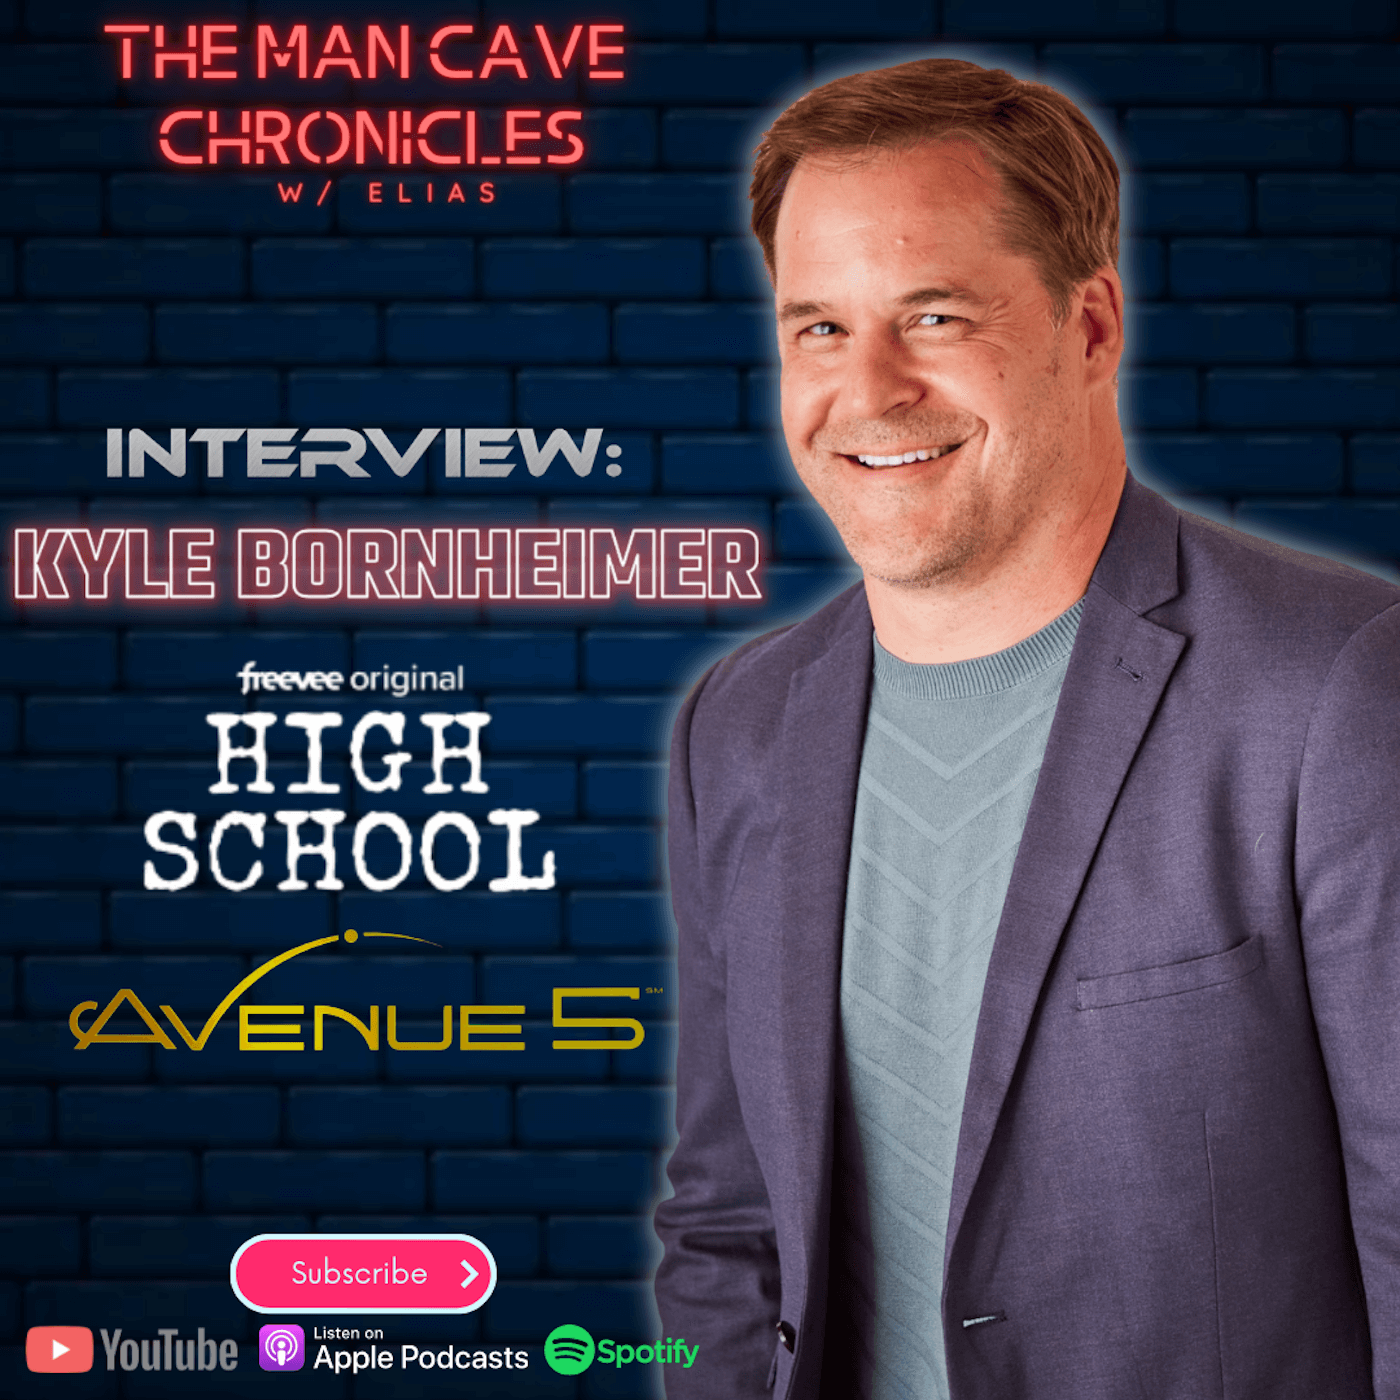 Kyle Bornheimer on Amazon’s Freevee new show ”High School” & Avenue 5